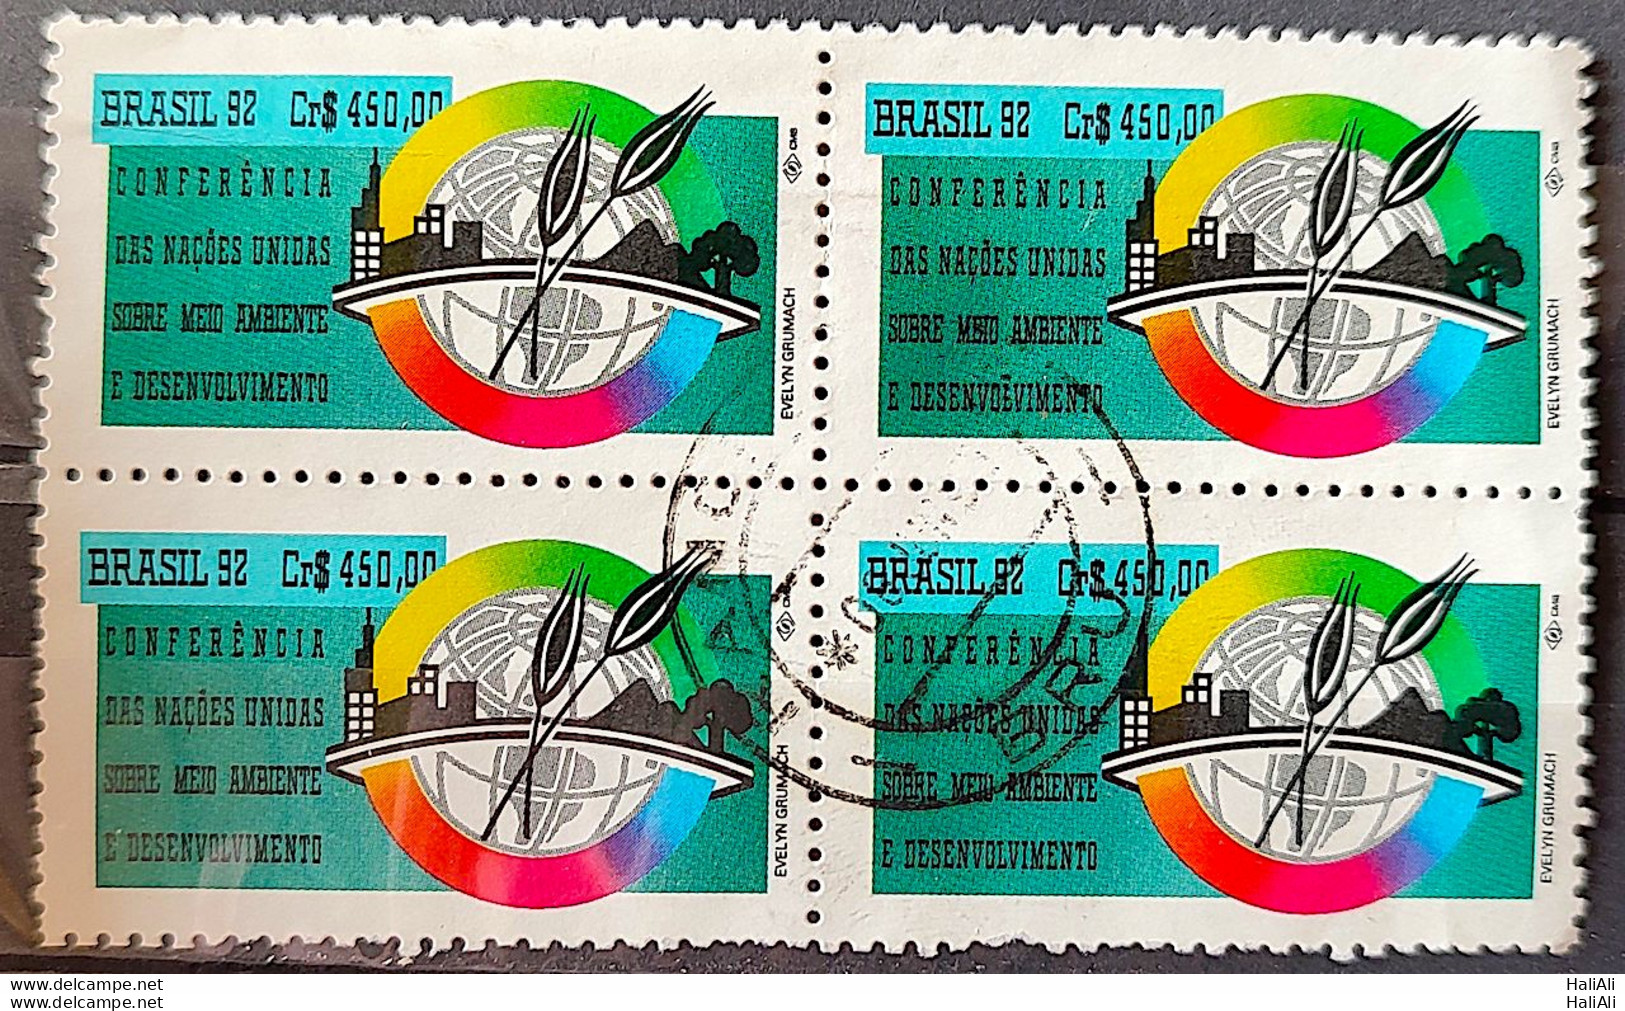 C 1799 Brazil Stamp Conference Eco 92 Rio De Janeiro Environment 1992 Block Of 4 Circulated 1 - Gebruikt